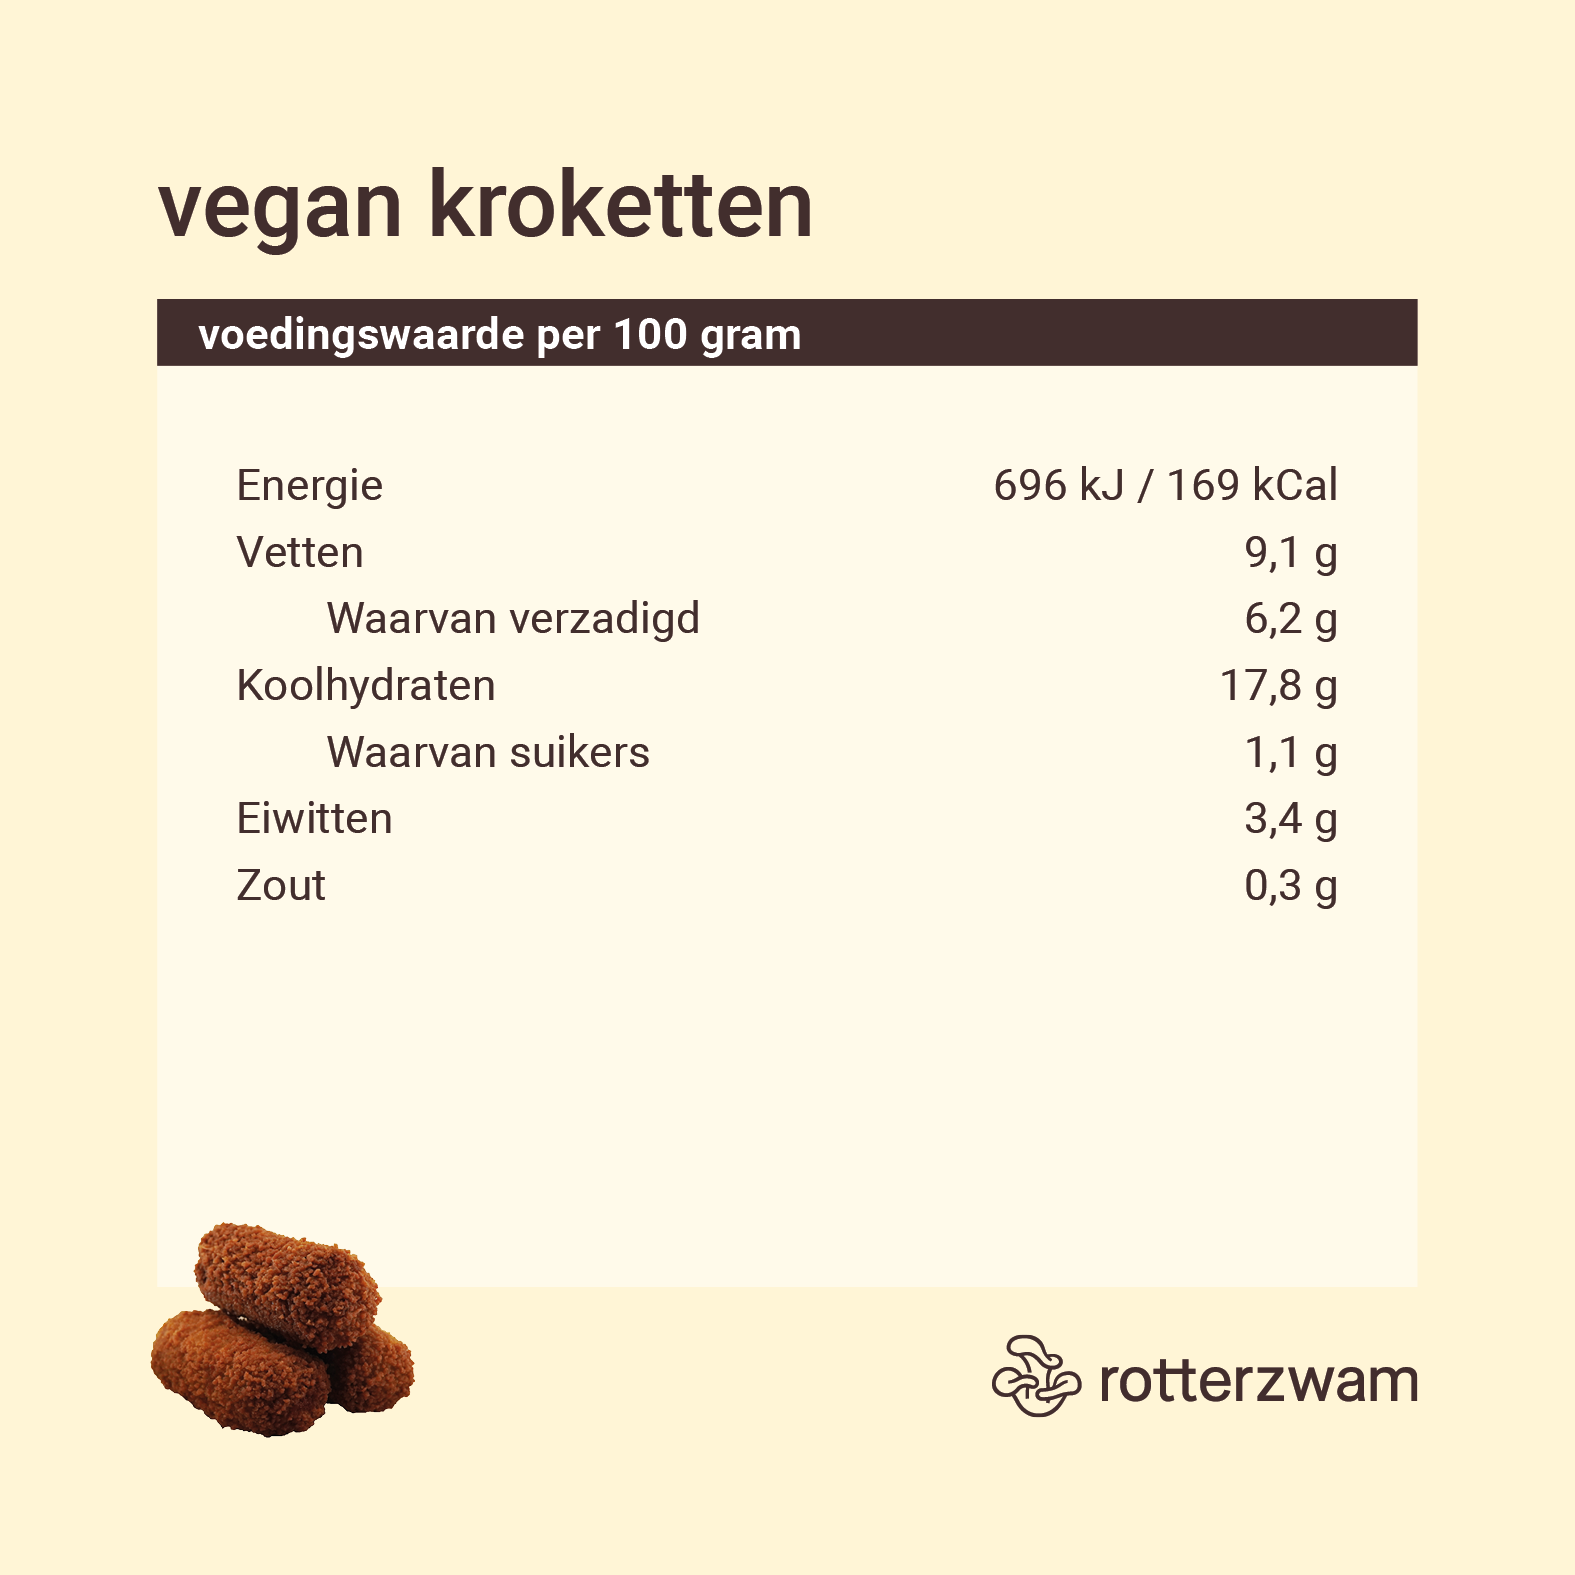 Oesterzwam kroketten - Vegan